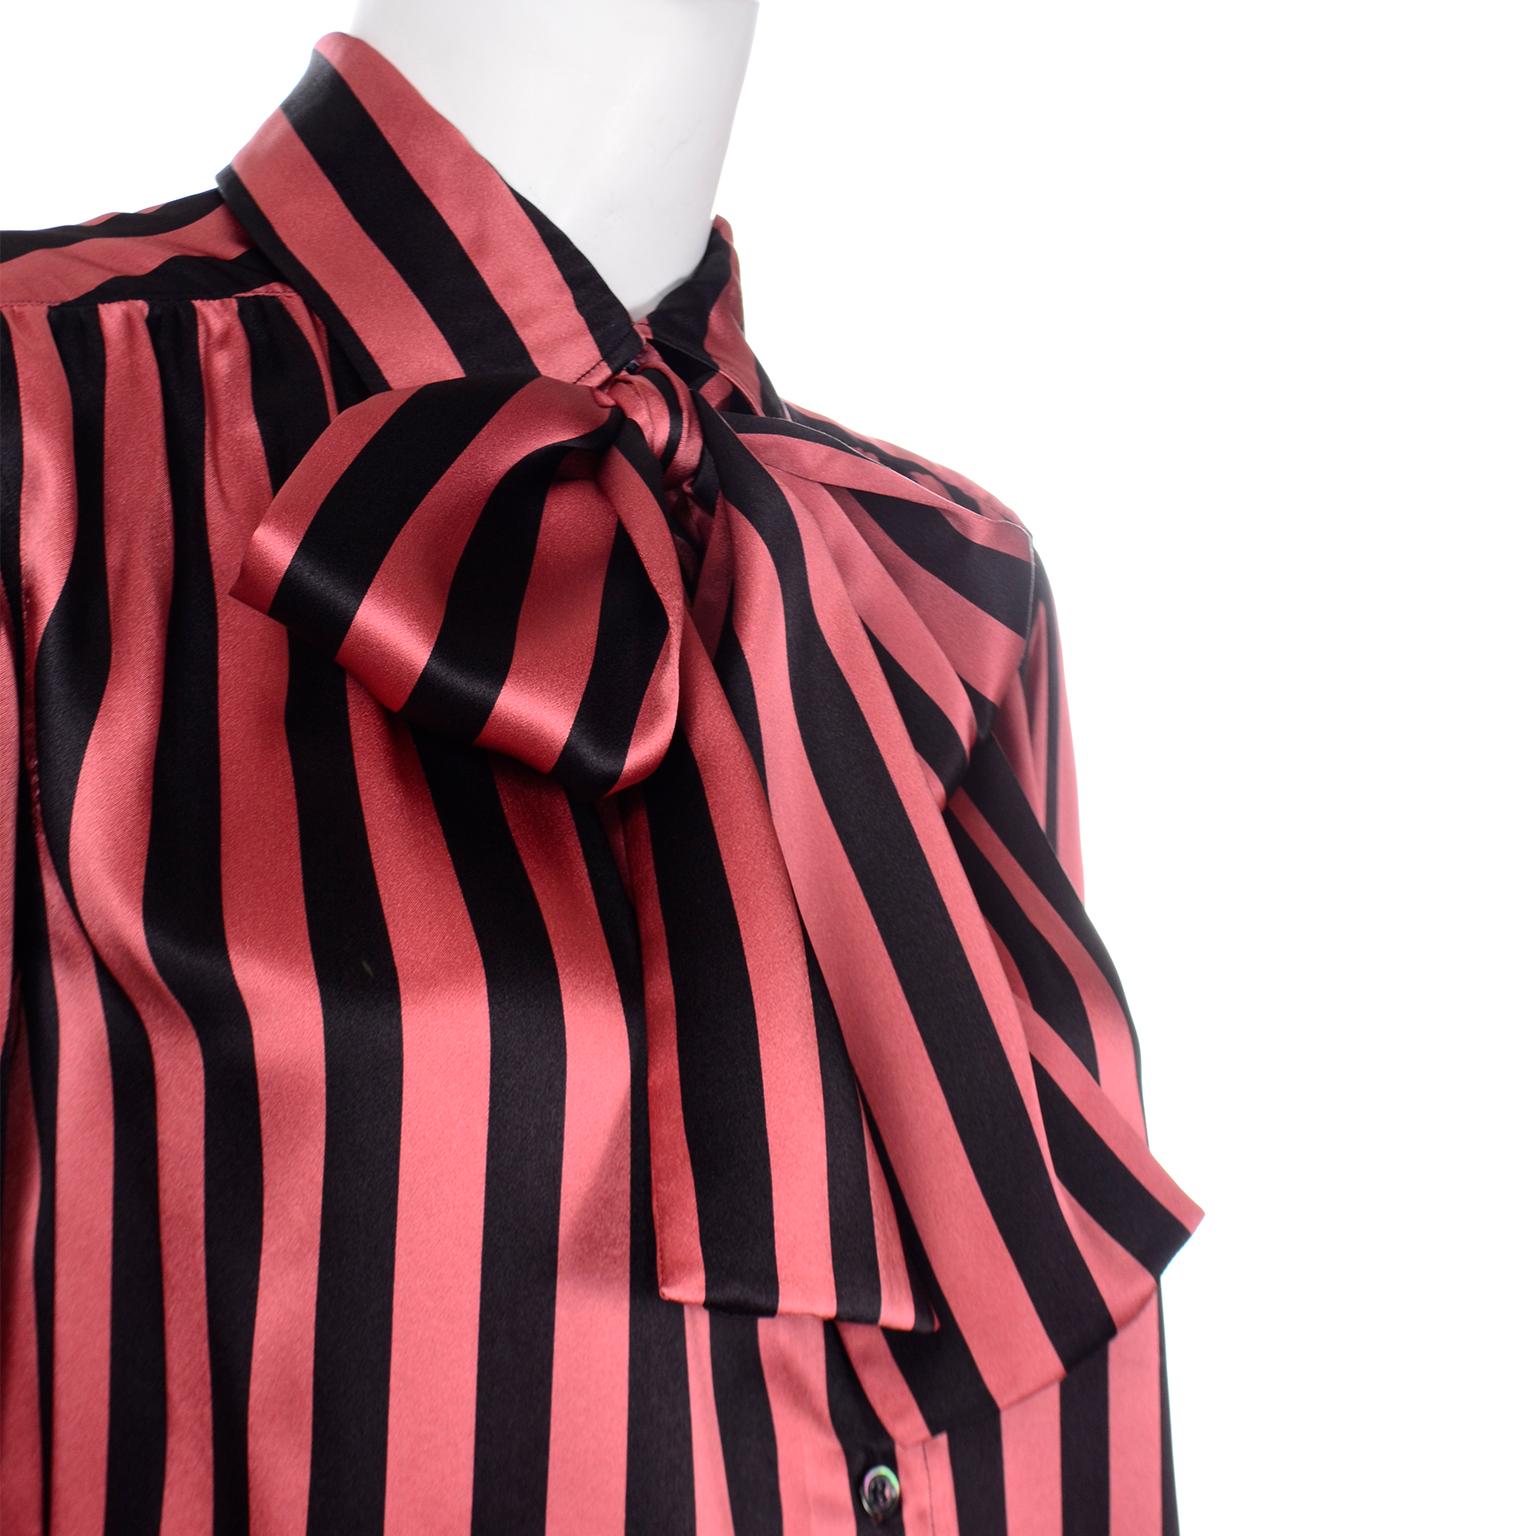 Yves Saint Laurent Orange & Black Striped Silk Vintage Blouse With Sash Bow For Sale 2